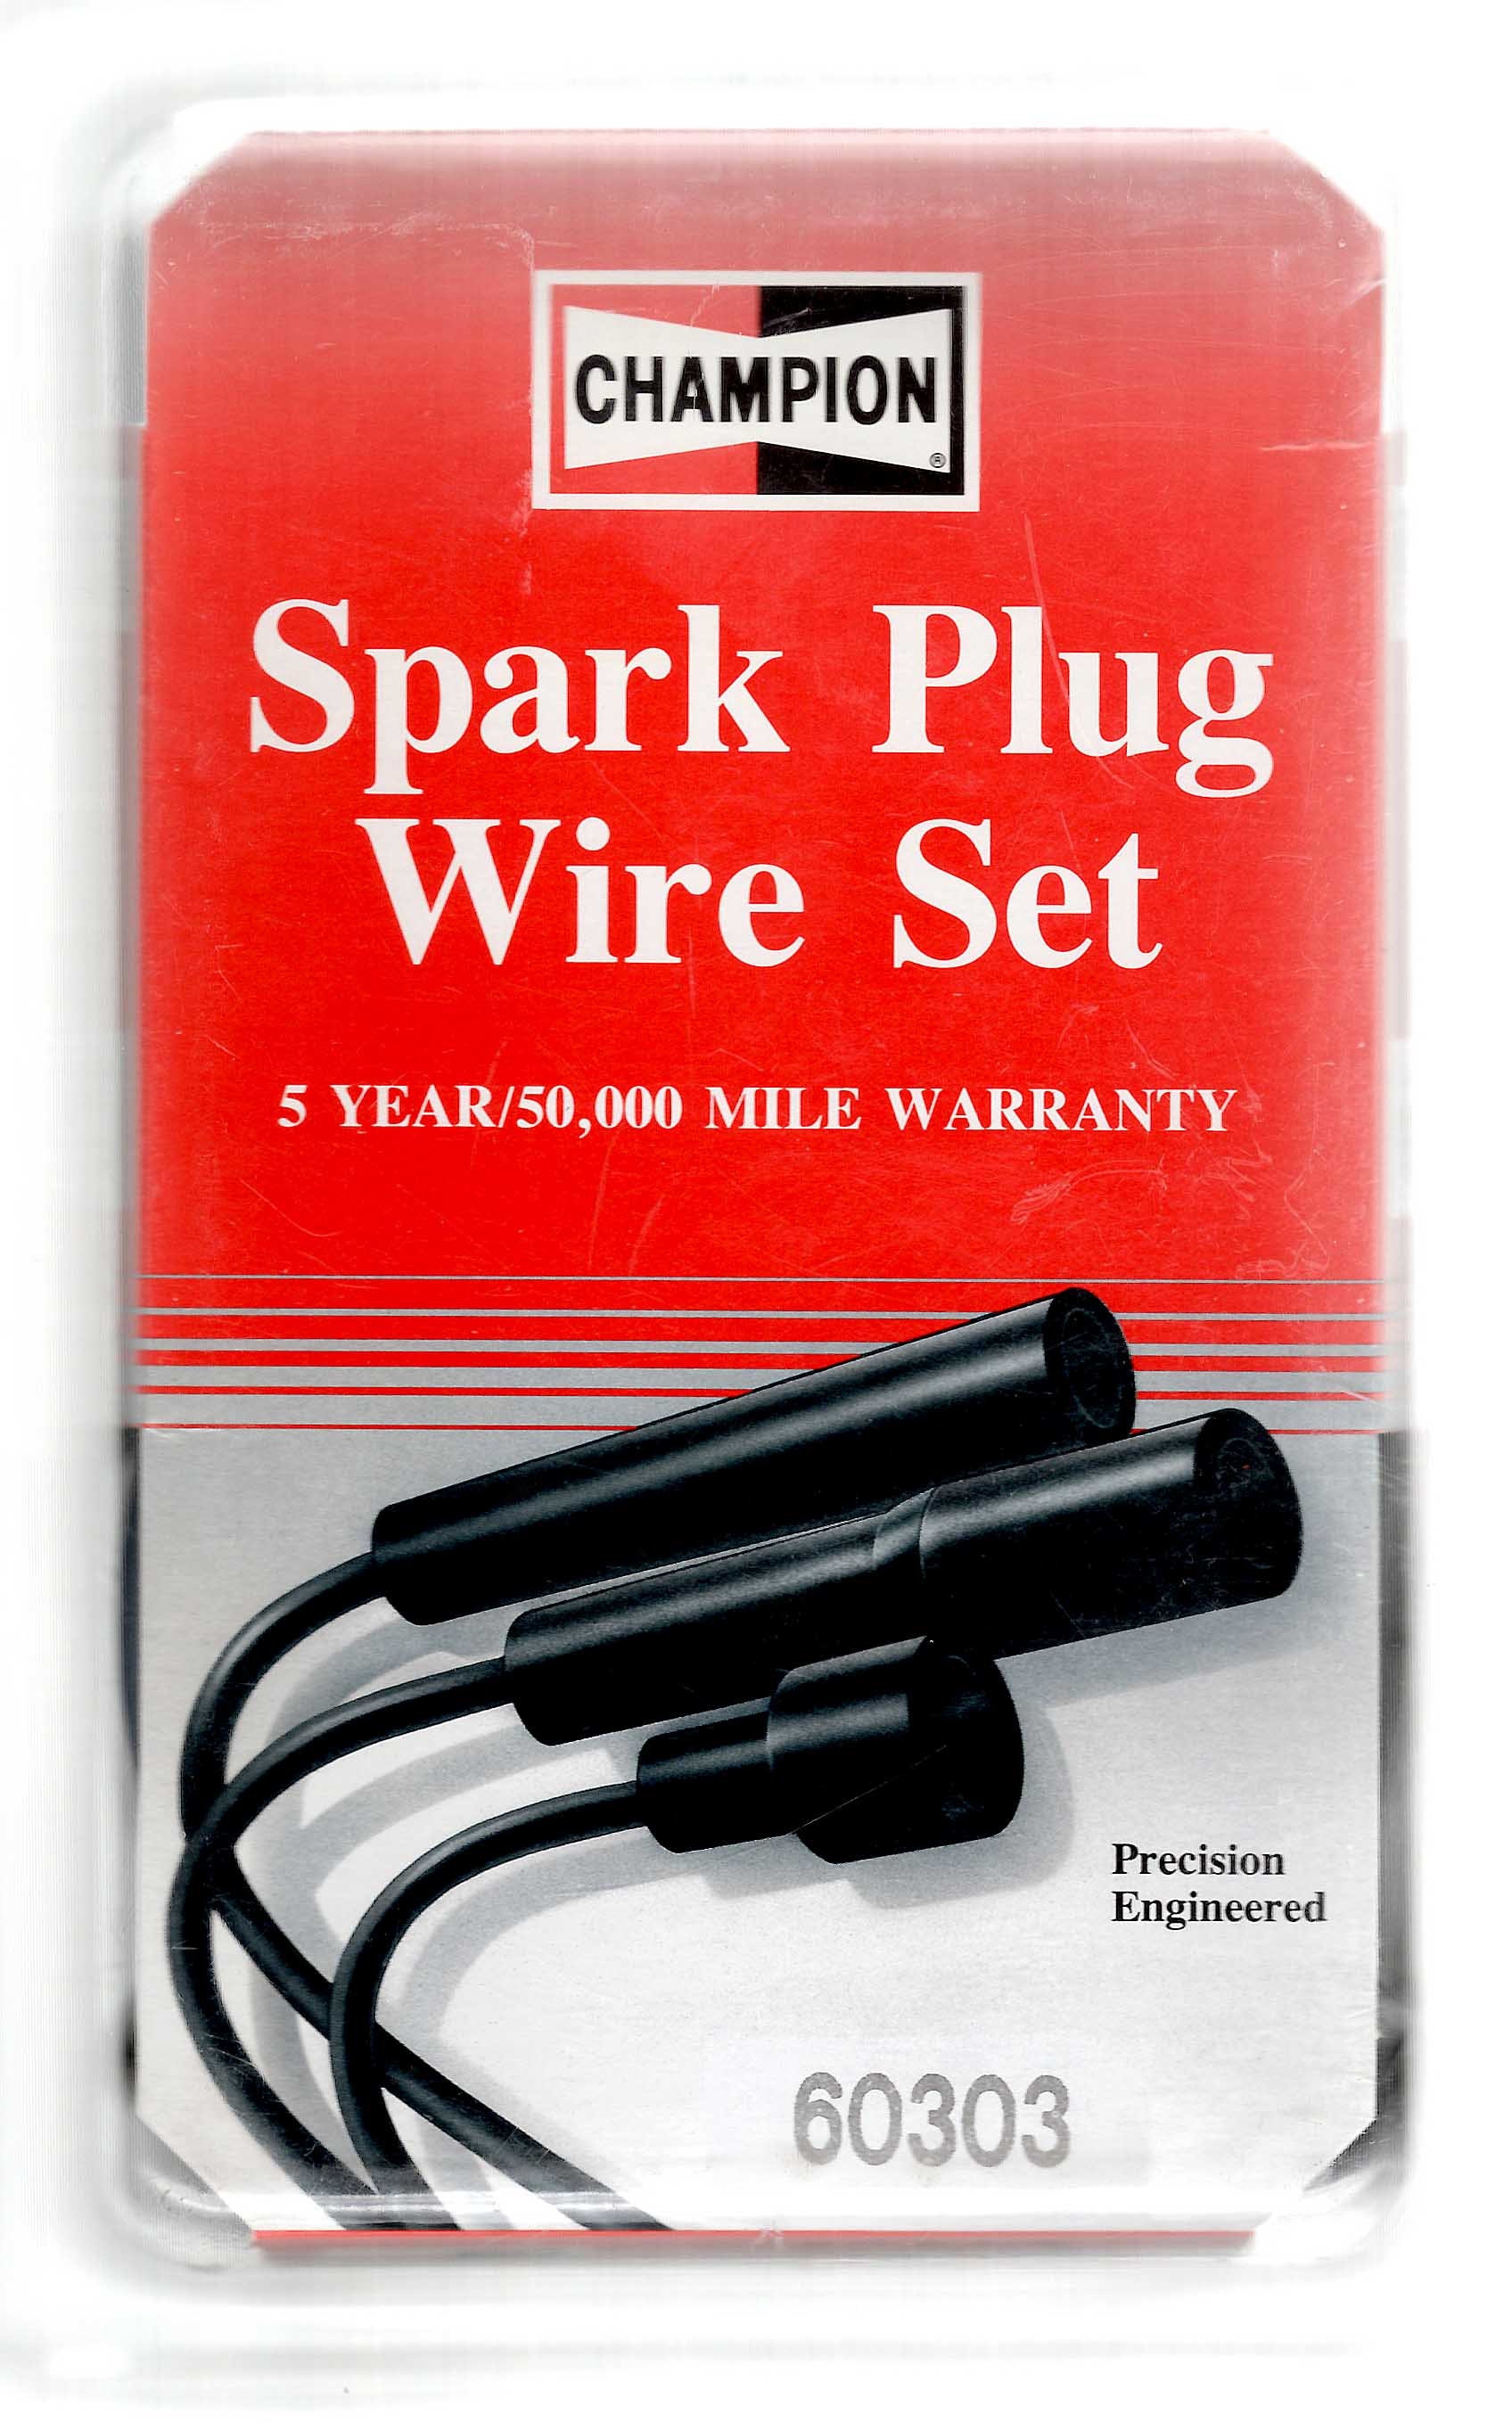 Spark Plug Wire Set Model 60303 Tune Up Brand | Etsy